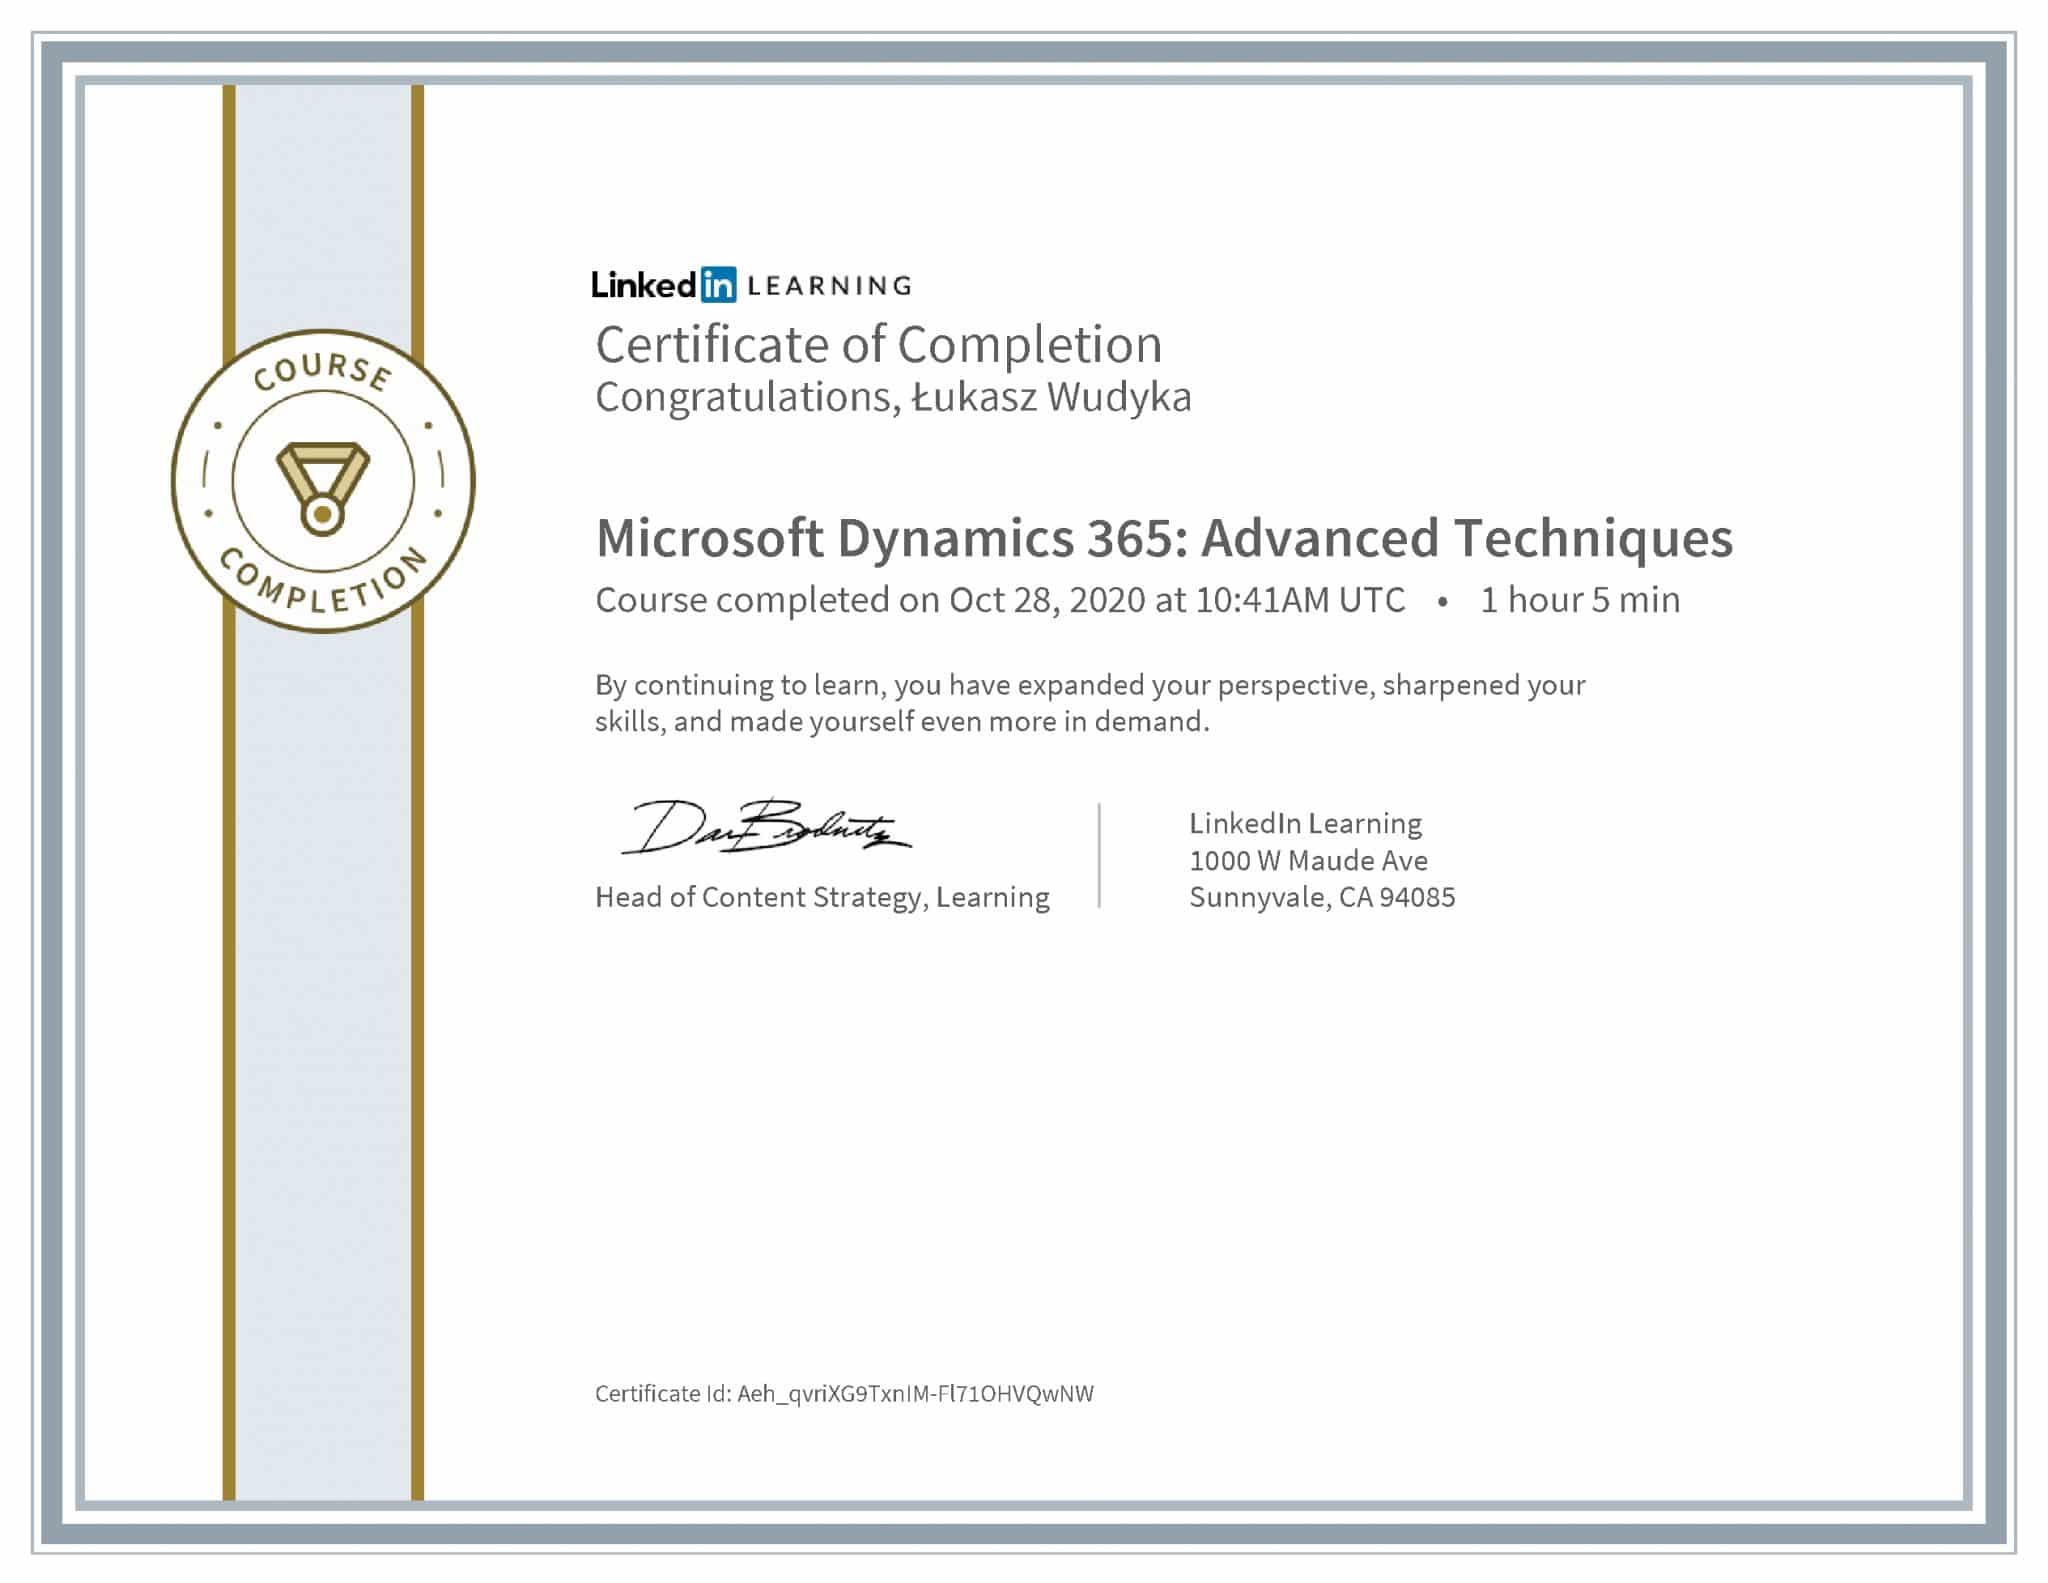 Łukasz Wudyka certyfikat LinkedIn Microsoft Dynamics 365: Advanced Techniques